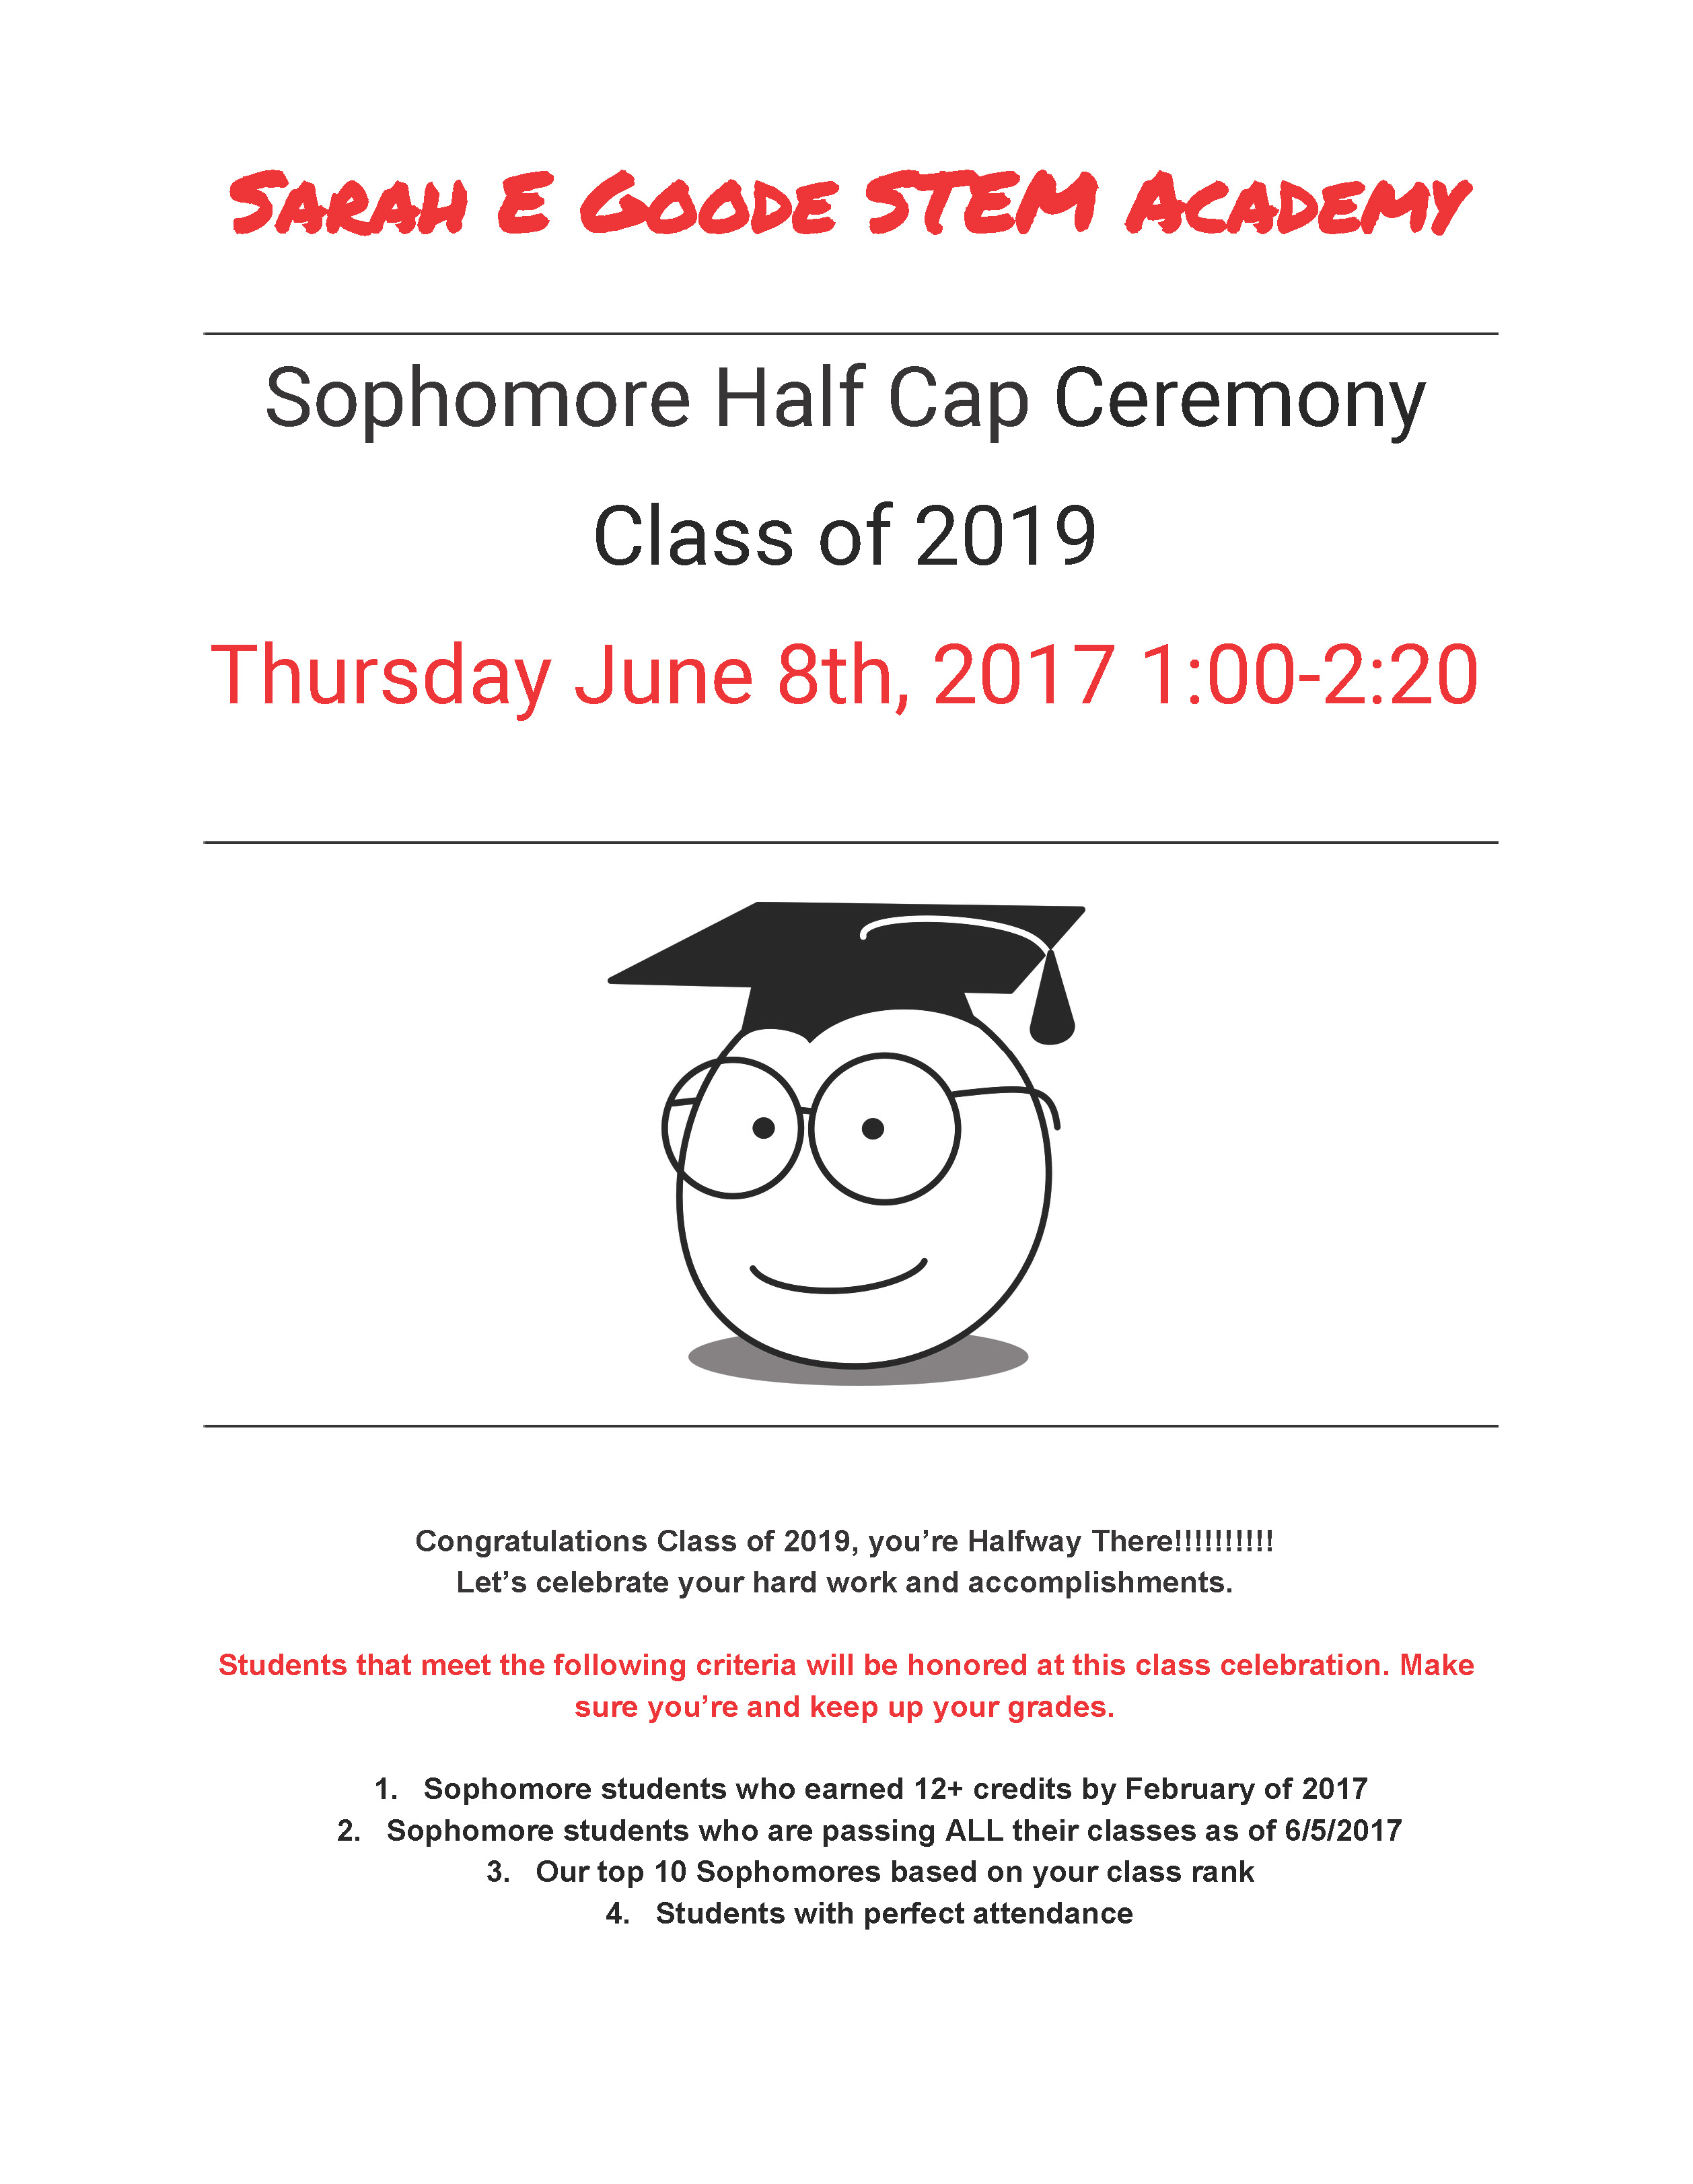 Sophomore Half Cap Ceremony